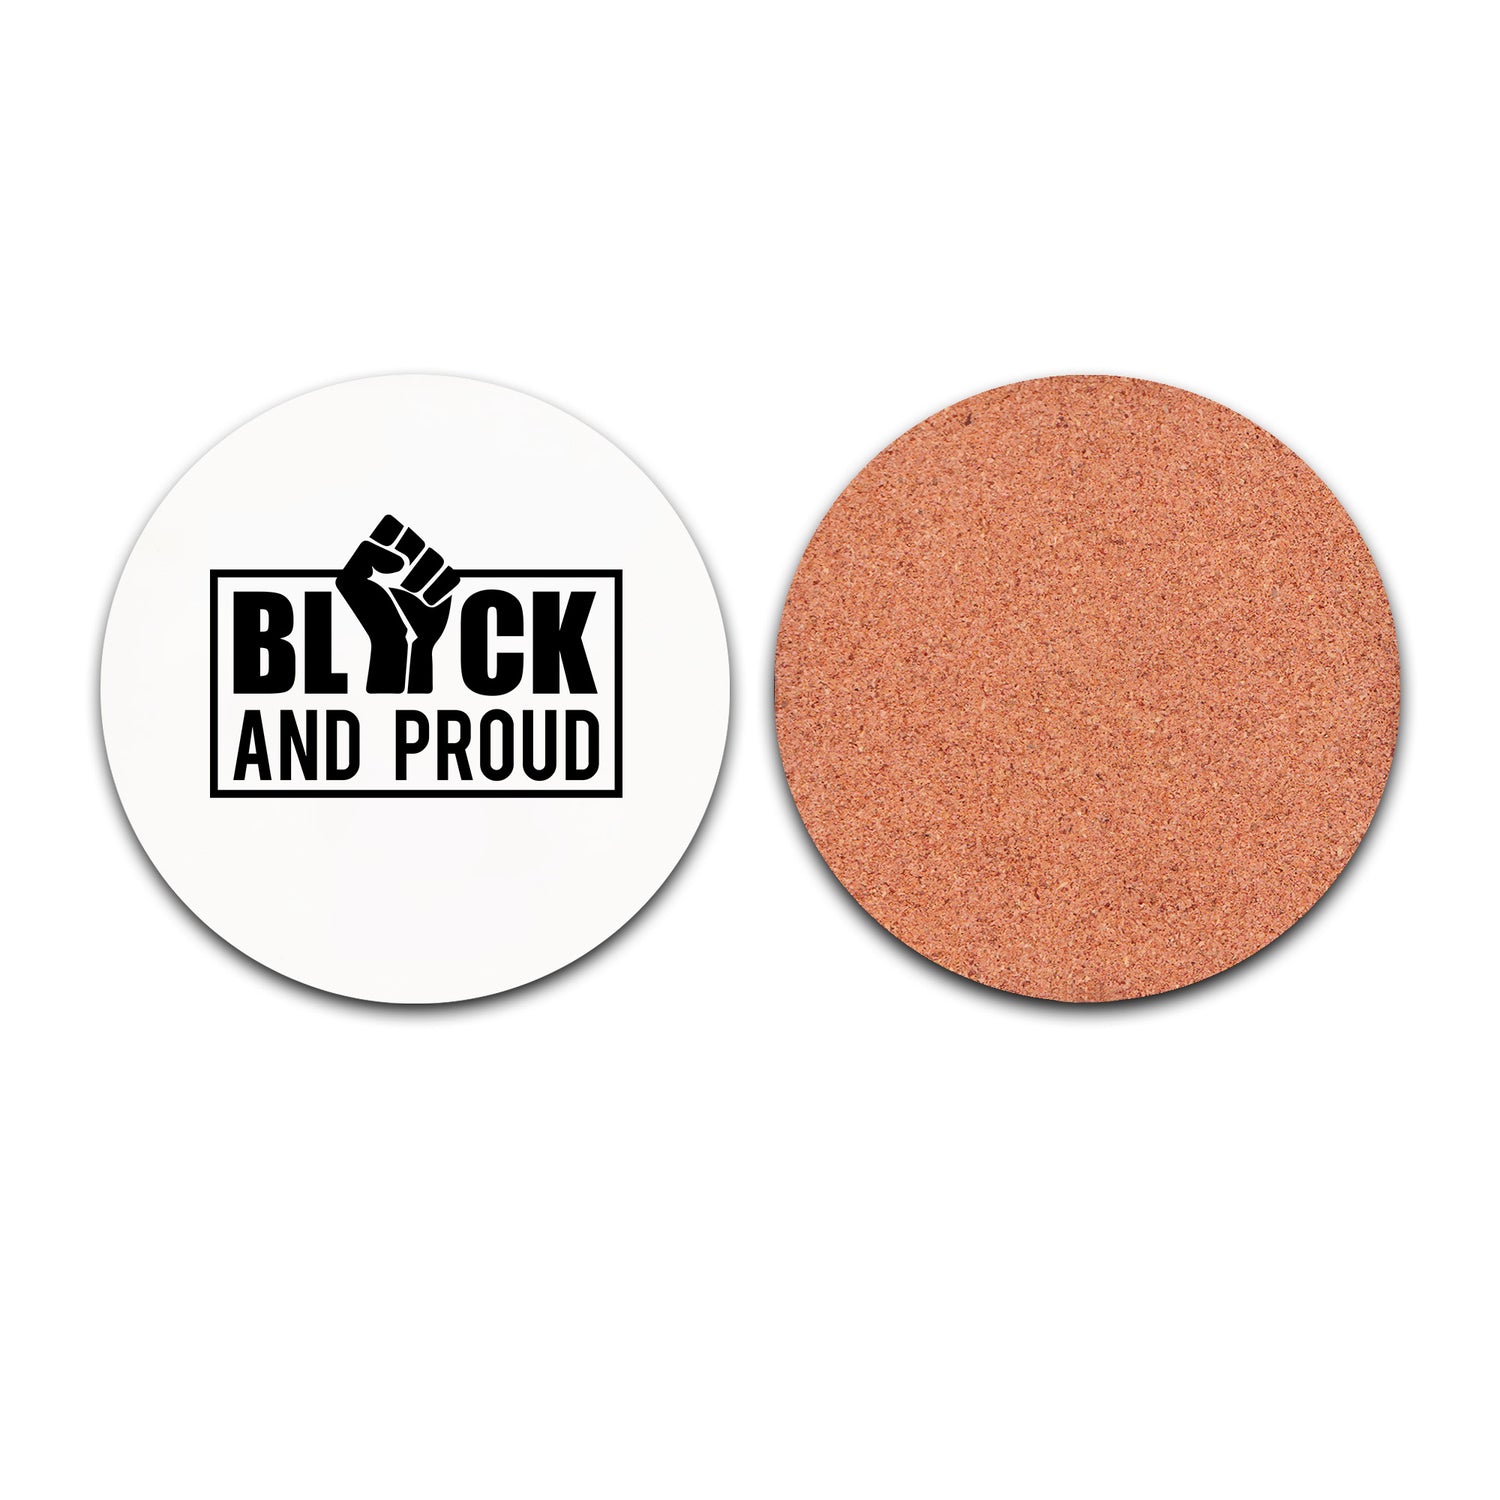 Black and Whie 3.5"x3.5' Black and Proud Round Ceramic Coaster